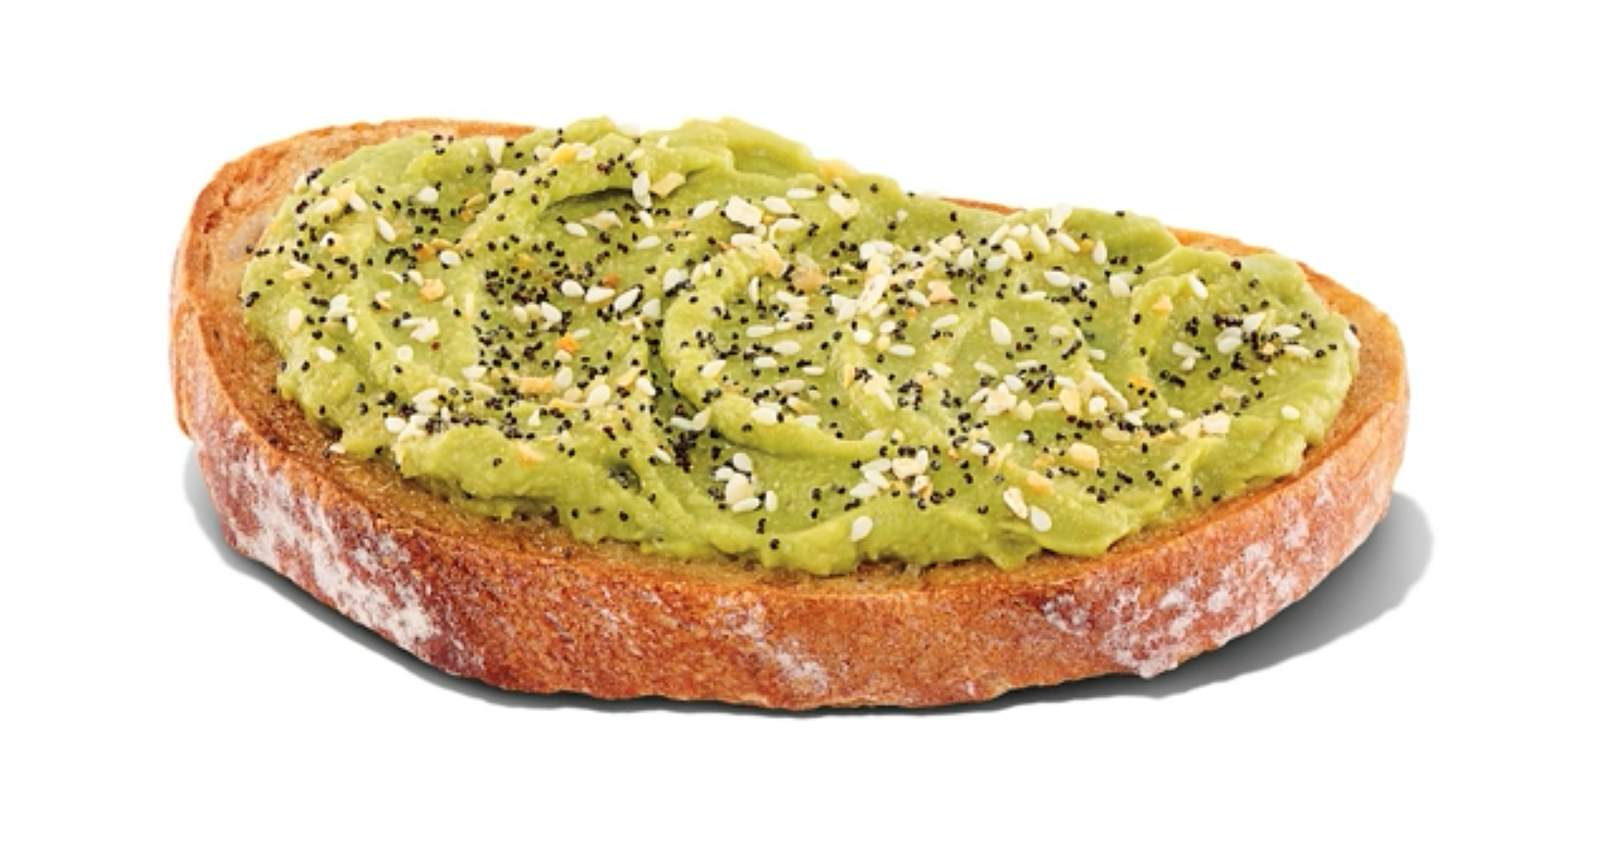 Dunkin hops on trend, adds avocado toast to menu